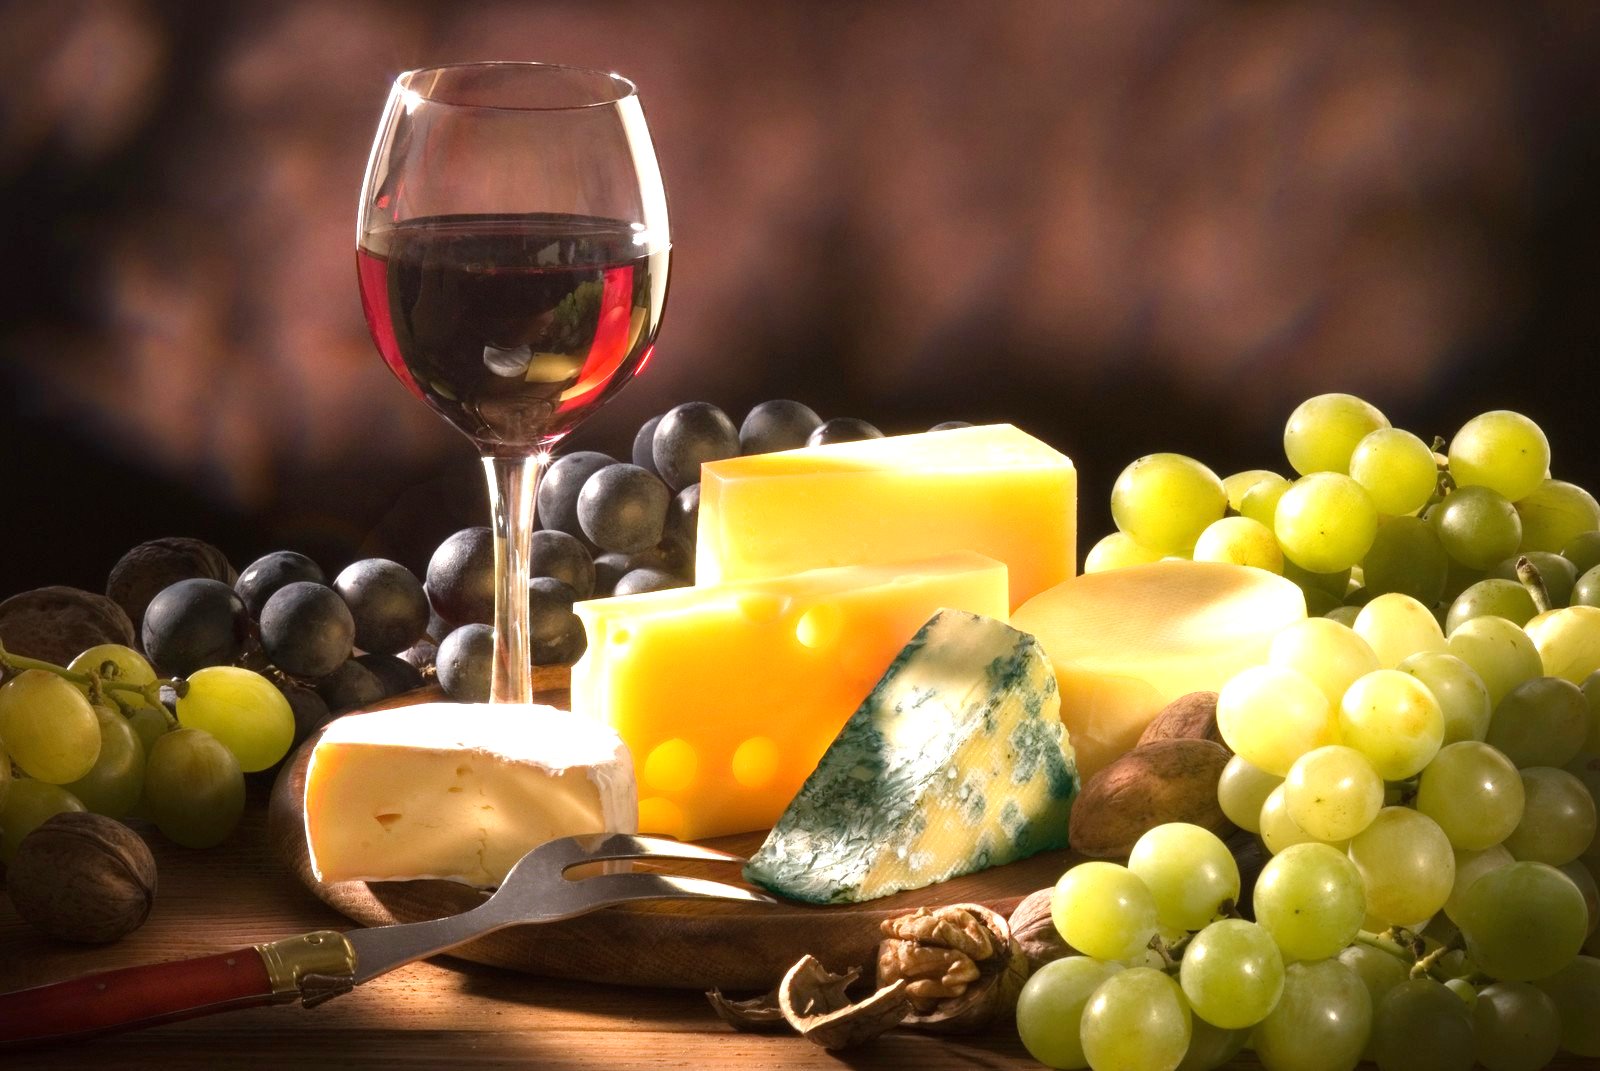 Wine and Cheese Google image from https://evbdn.eventbrite.com/s3-s3/eventlogos/29870433/winecheese.jpg